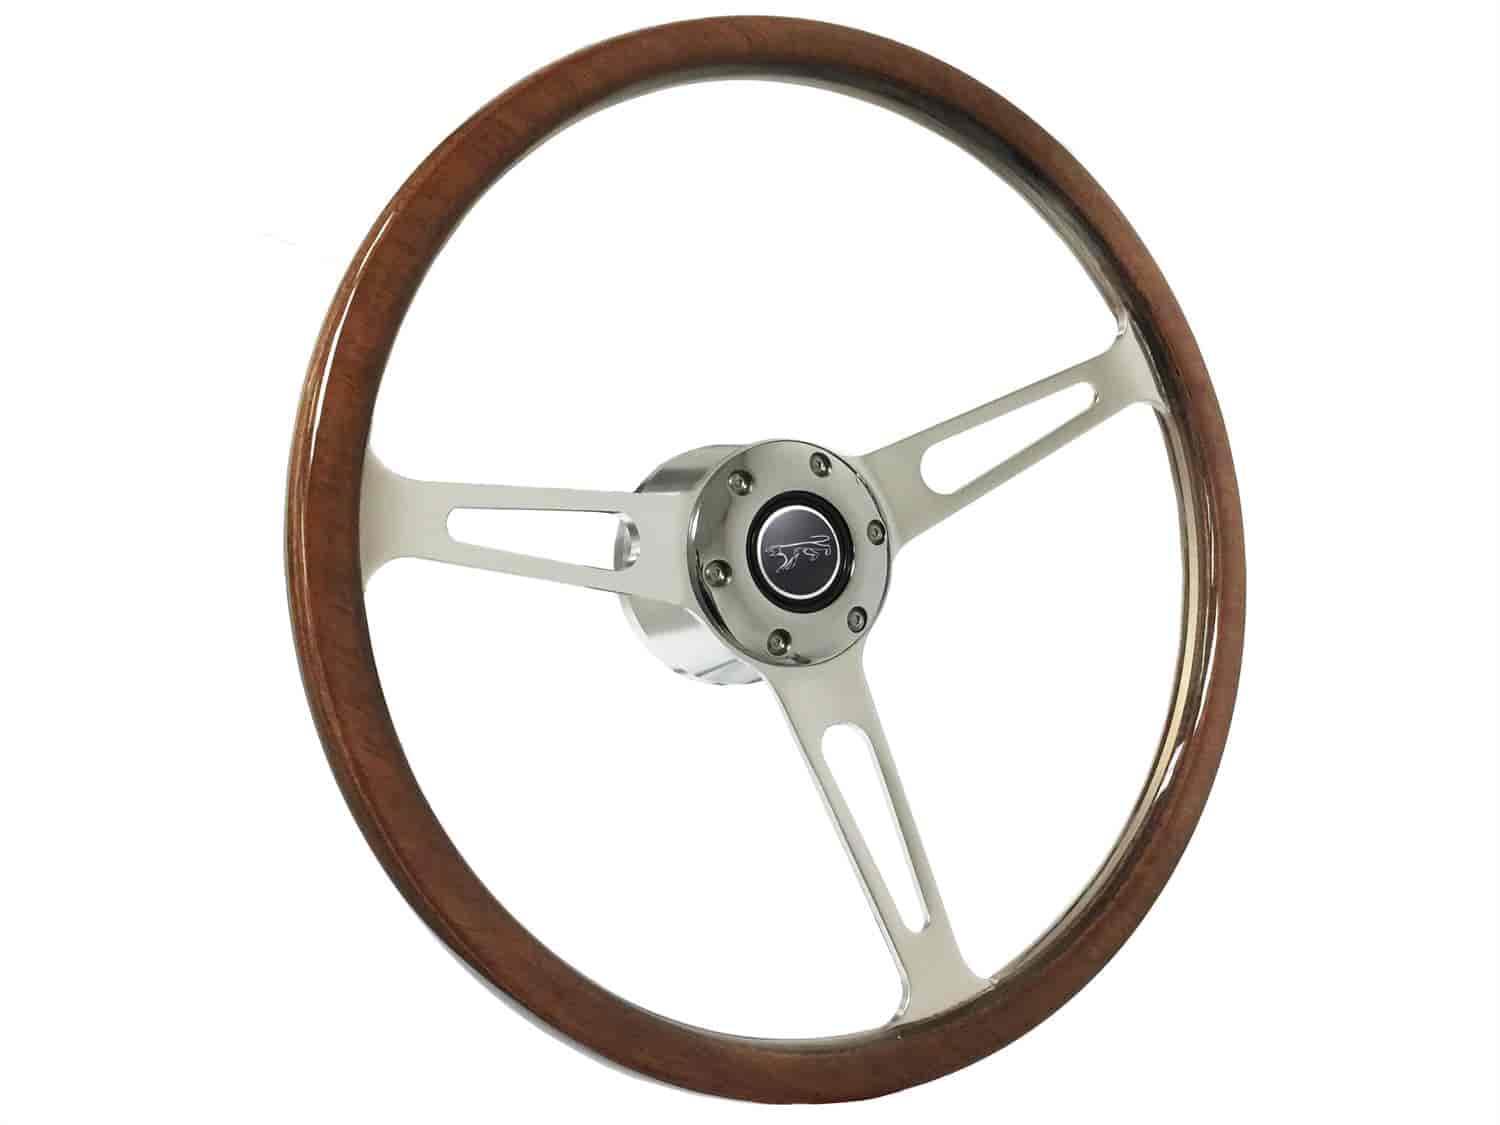 S6 Classic Steering Wheel Kit 1968-1991 Ford/Mercury, 15 in. Diameter, Deluxe Walnut Wood Grip, w/ 6-Bolt Adapter & Horn Button